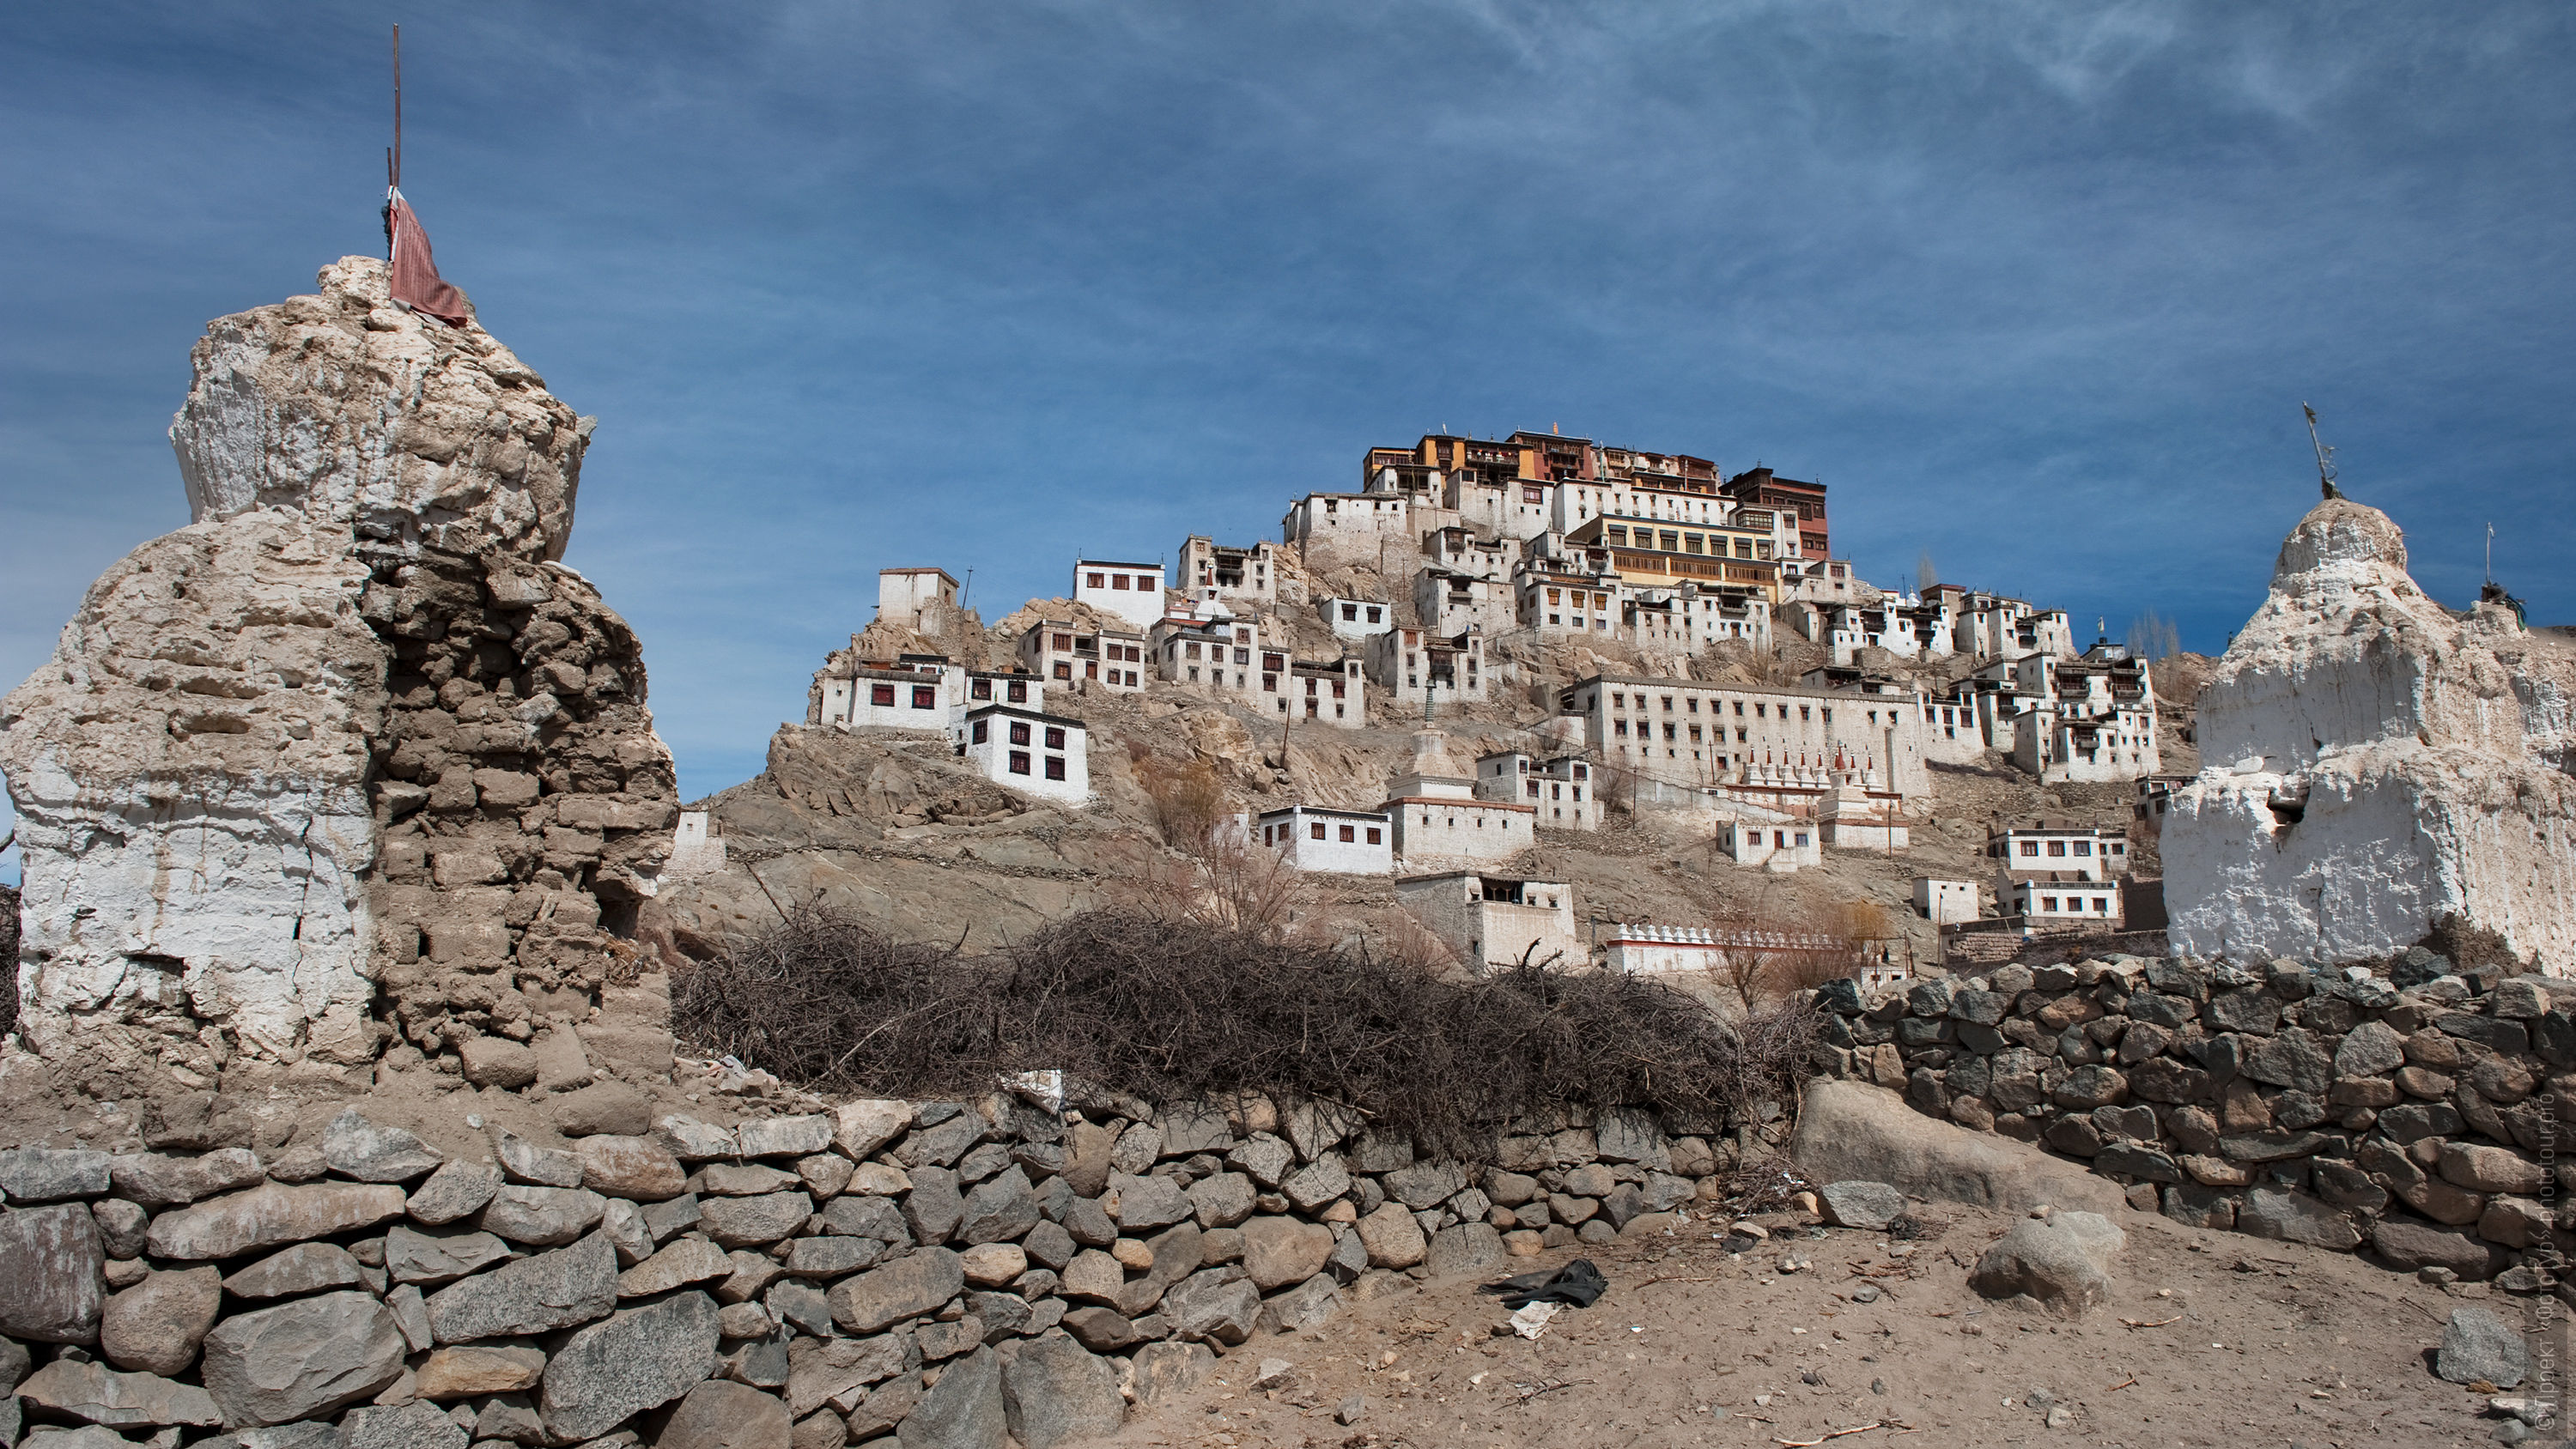 Tour Origins of Tibet: Bon, true Aryans to Da Khan, Mystery Dance Tsam in Lamayuru, Lake Pangong, June 15 - 26, 2020. Tour to Ladakh.